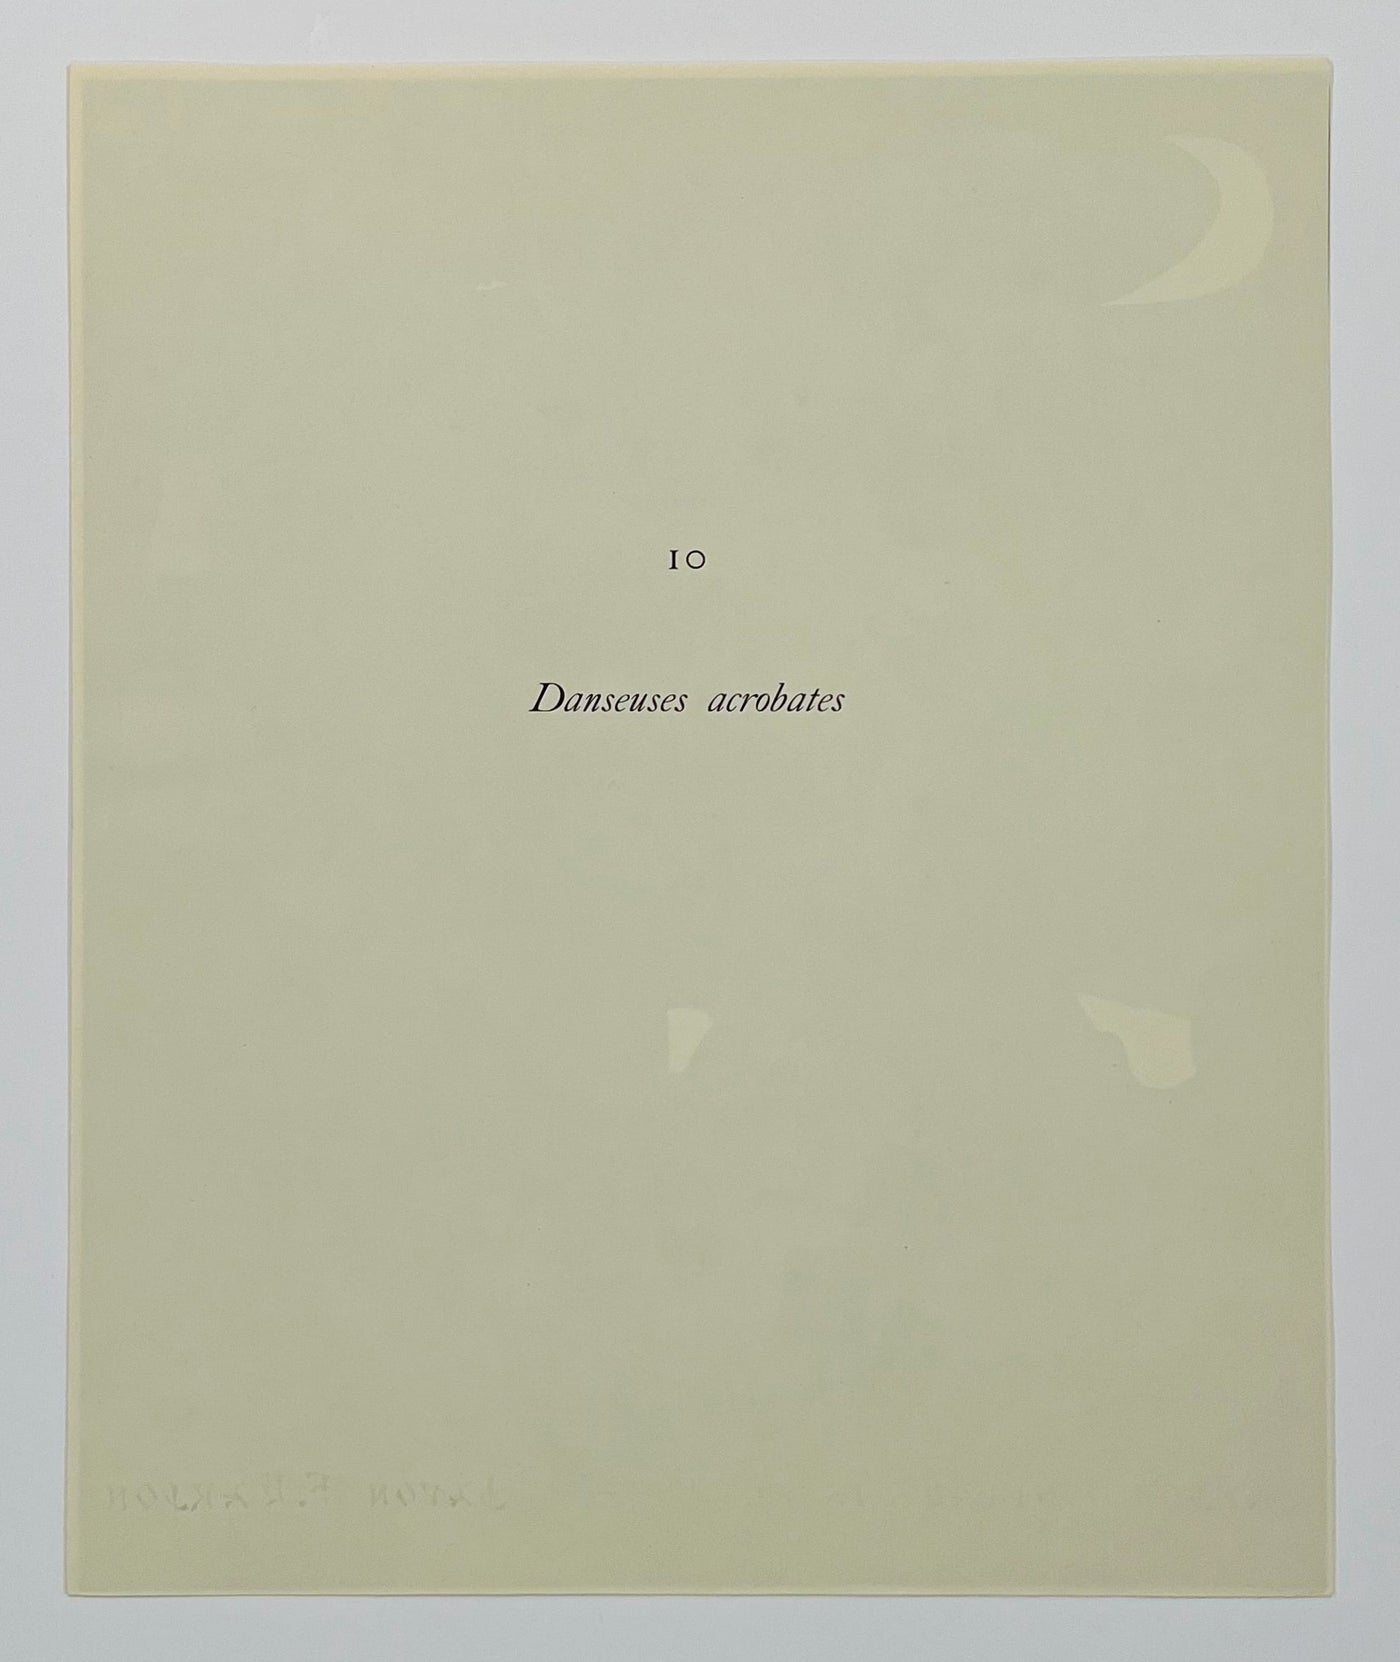 Joan Miro (after) Danseuses acrobates (Acrobatic Dancers), Plate X (Cramer No. 58) 1959